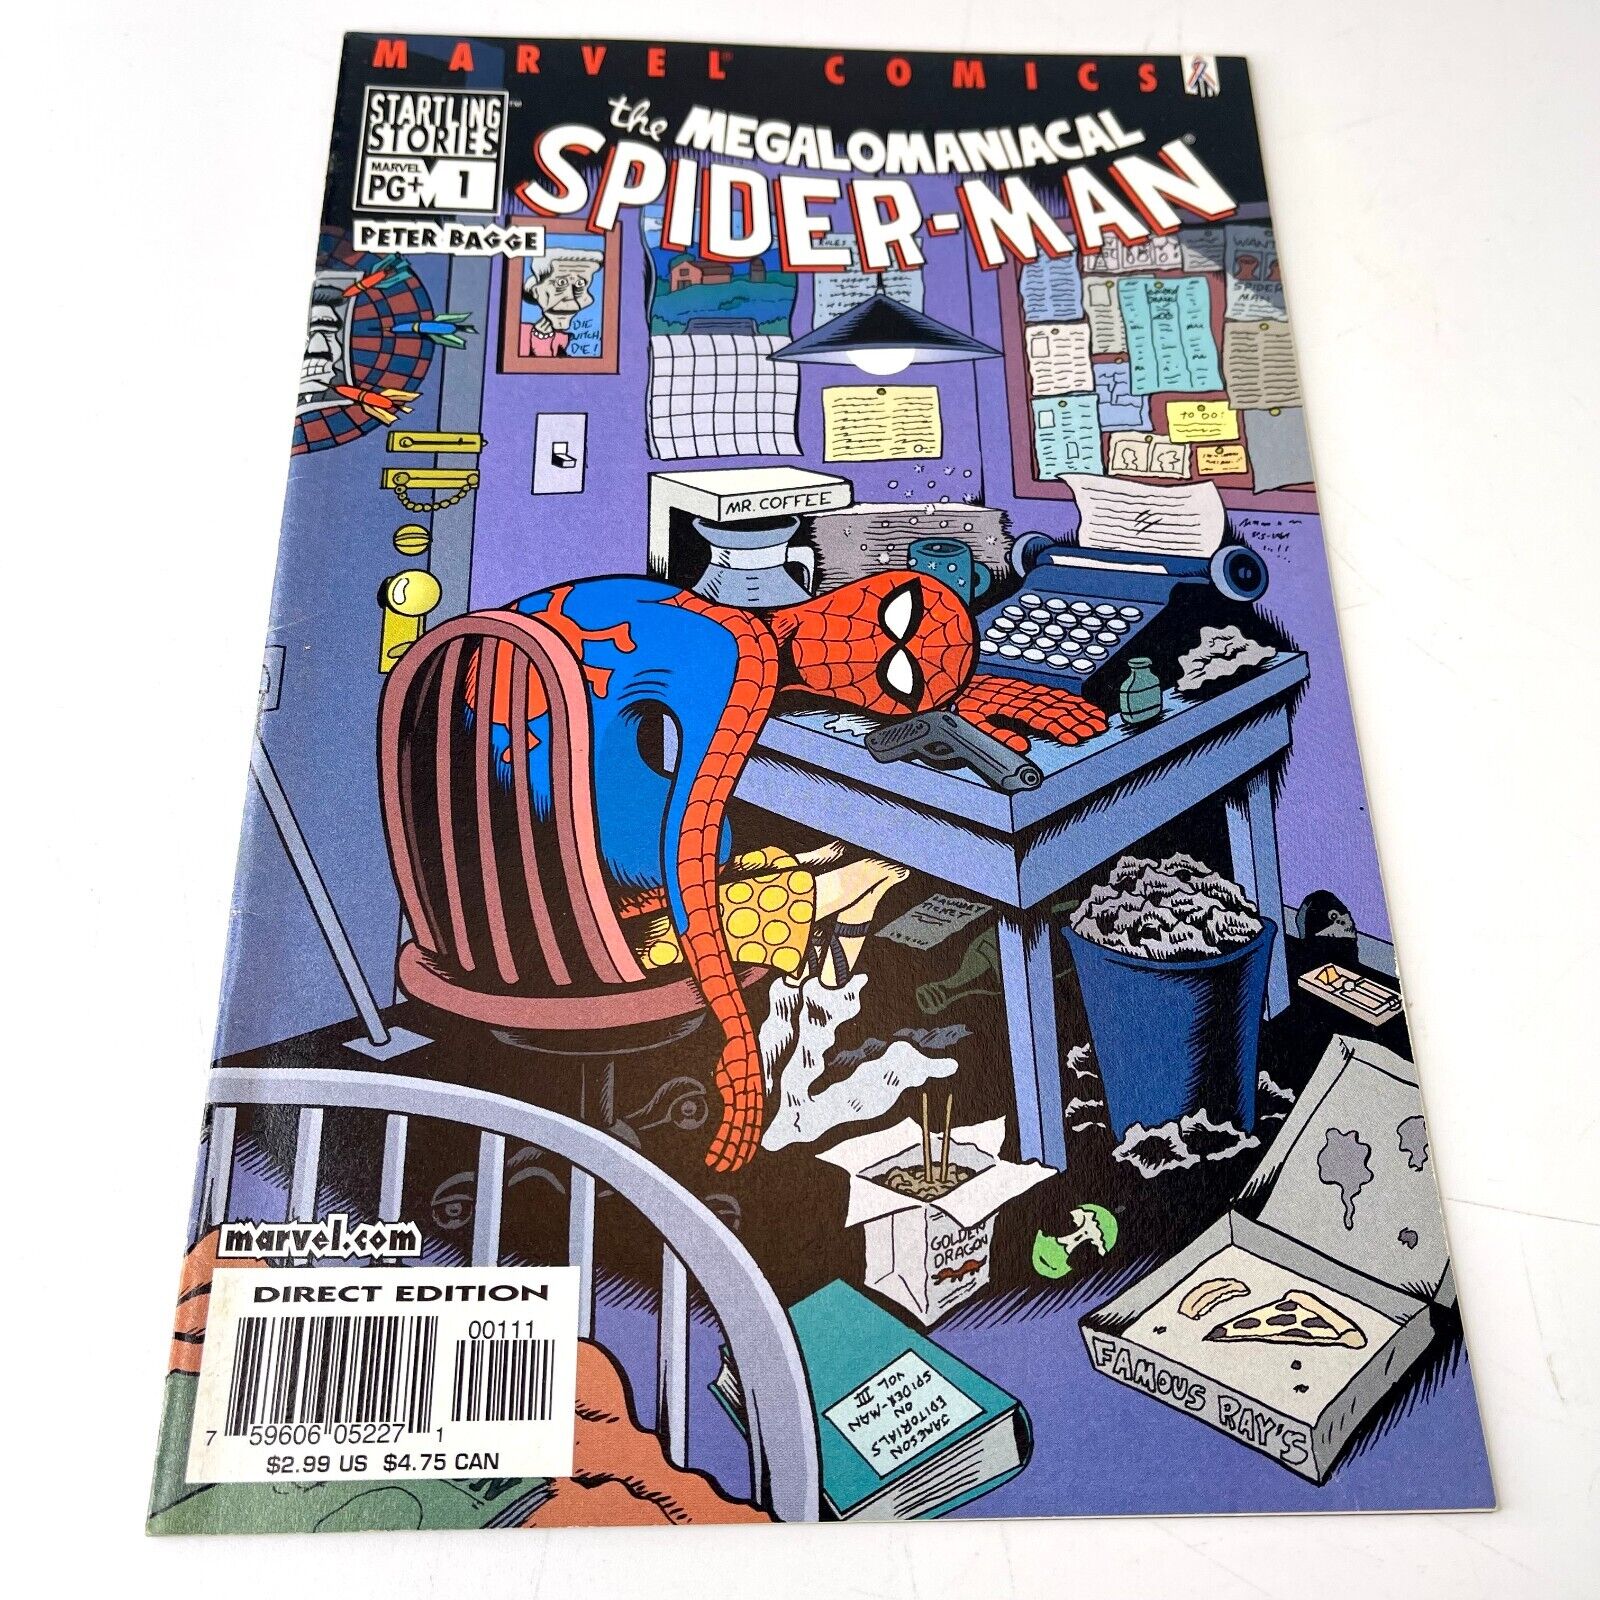 The Megalomaniacal Spider-Man #1 - Marvel Startling Stories June 2002